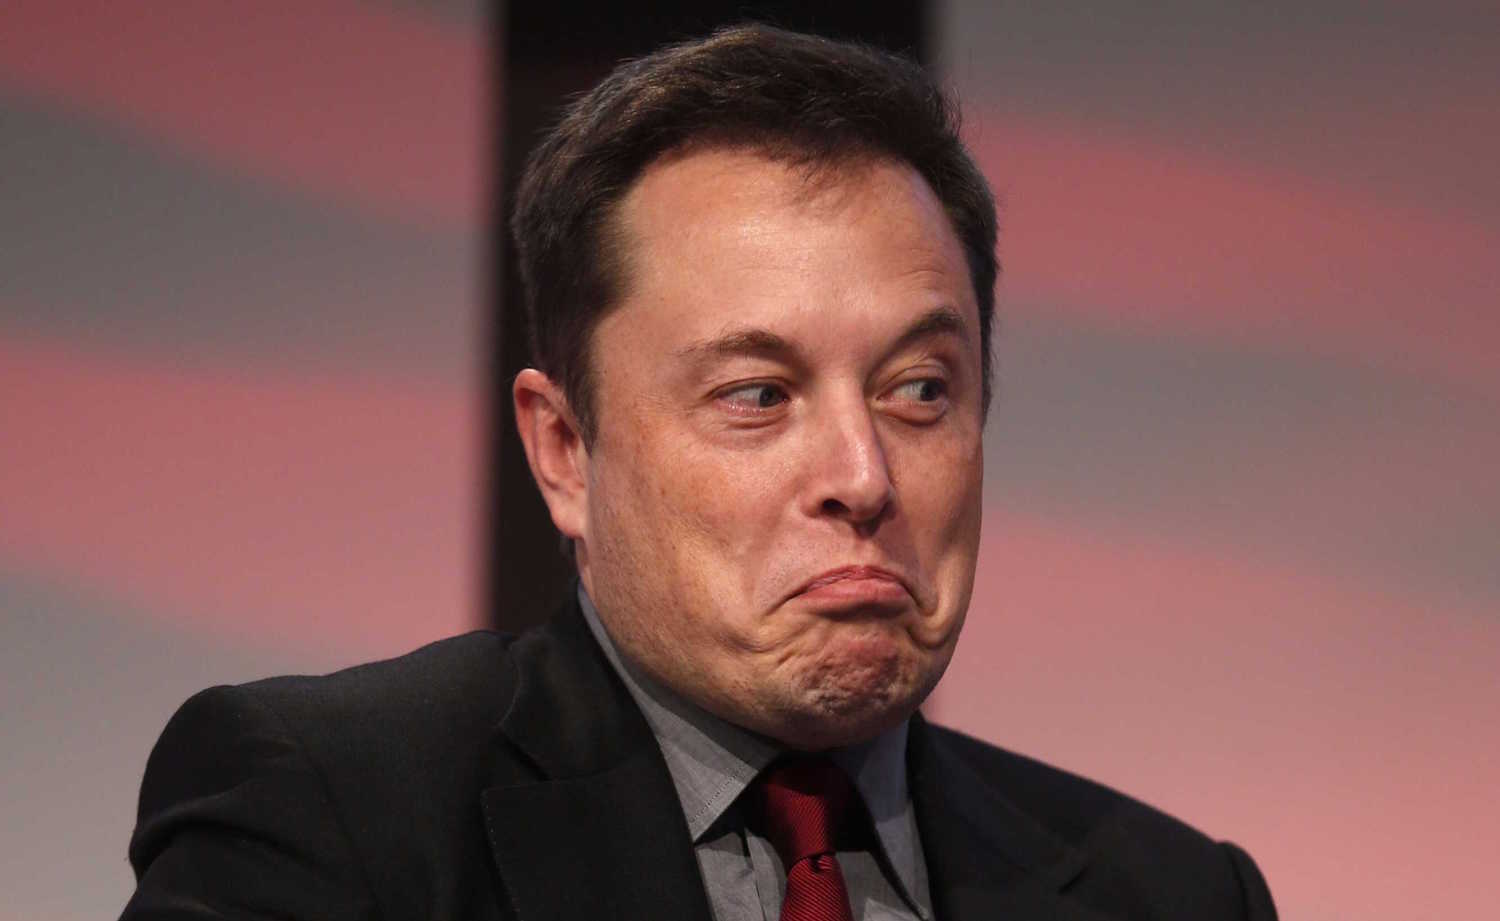 Elon Musk sells $4 billion Tesla shares, says no sales planned